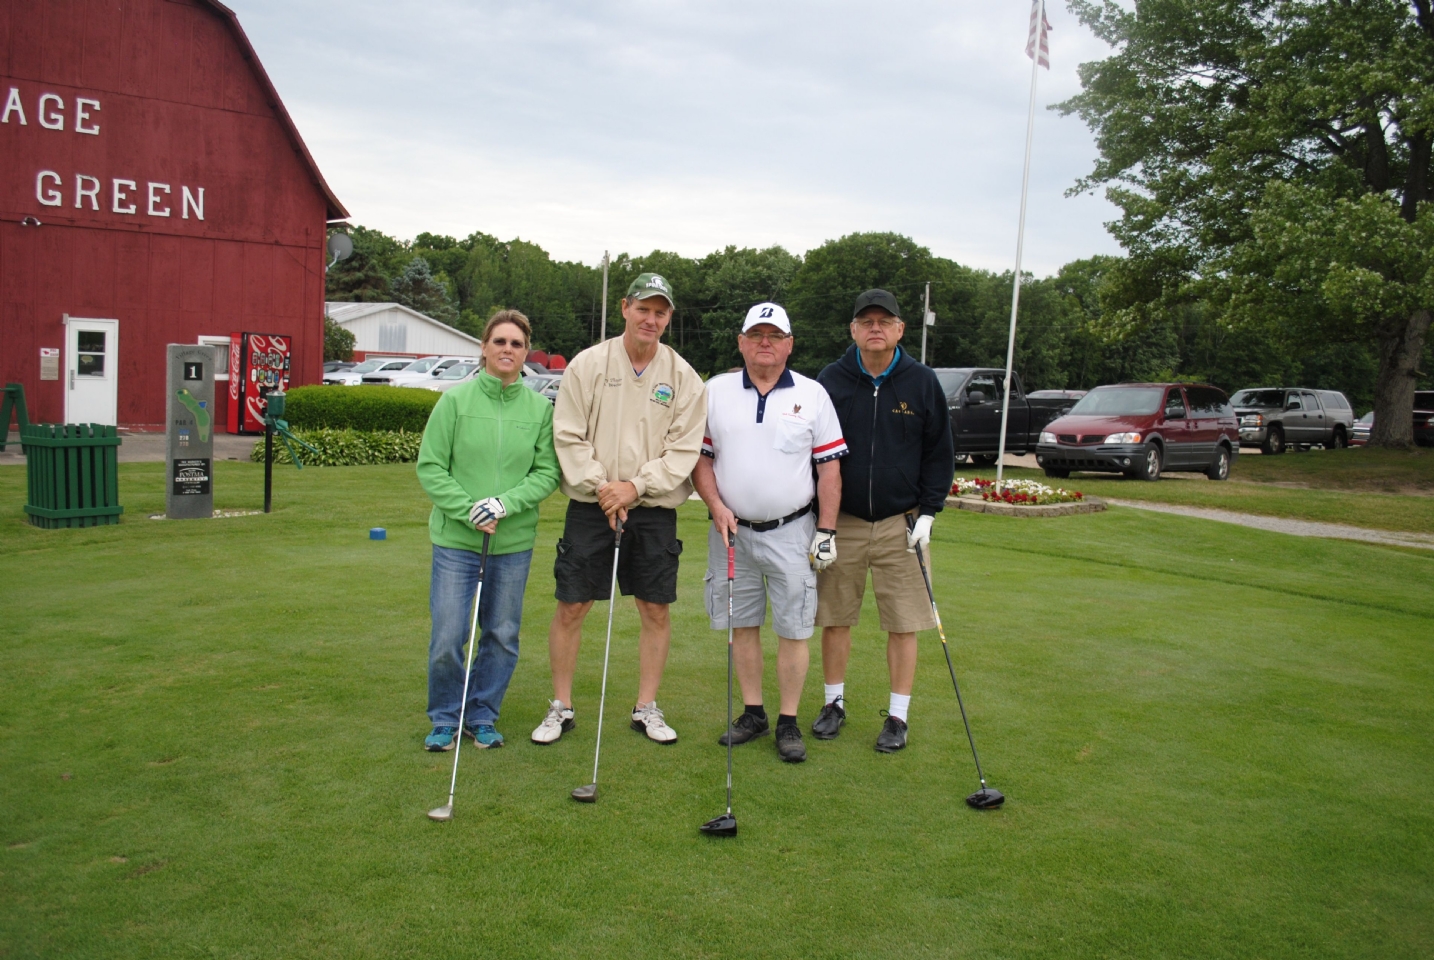 Village Green Golf Course, Newaygo, MI

Larry Thayer
PSC Lloyd Putman III
Amy Maroszek
Bruce Hall
